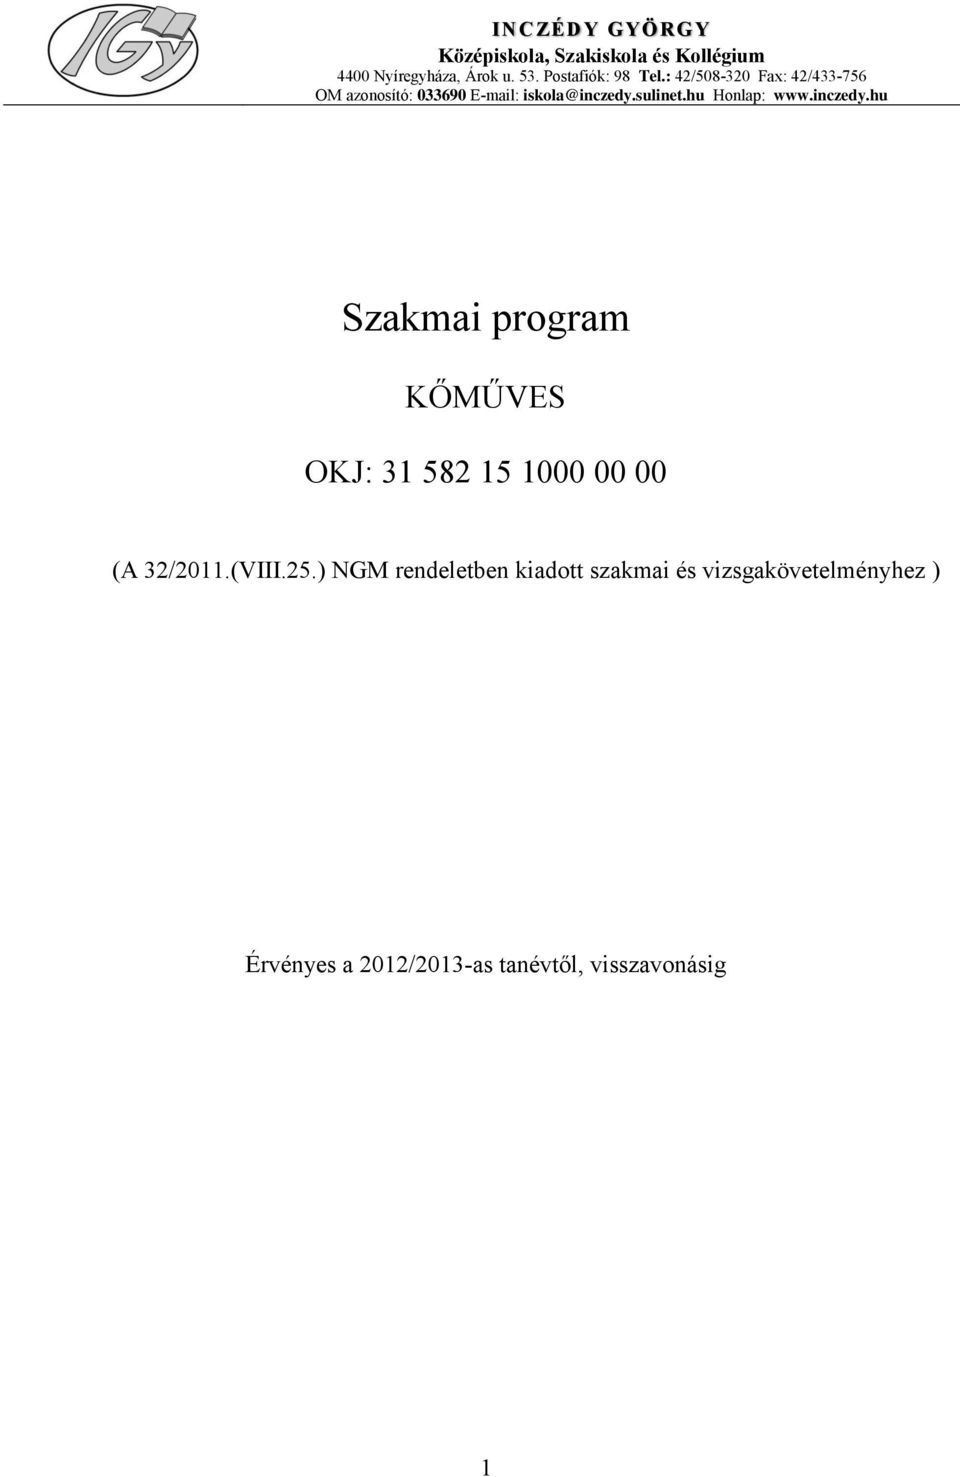 sulinet.hu Honlap: www.inczedy.hu Szakmai program KŐMŰVES OKJ: 3 582 5 (A 32/2.(VIII.25.